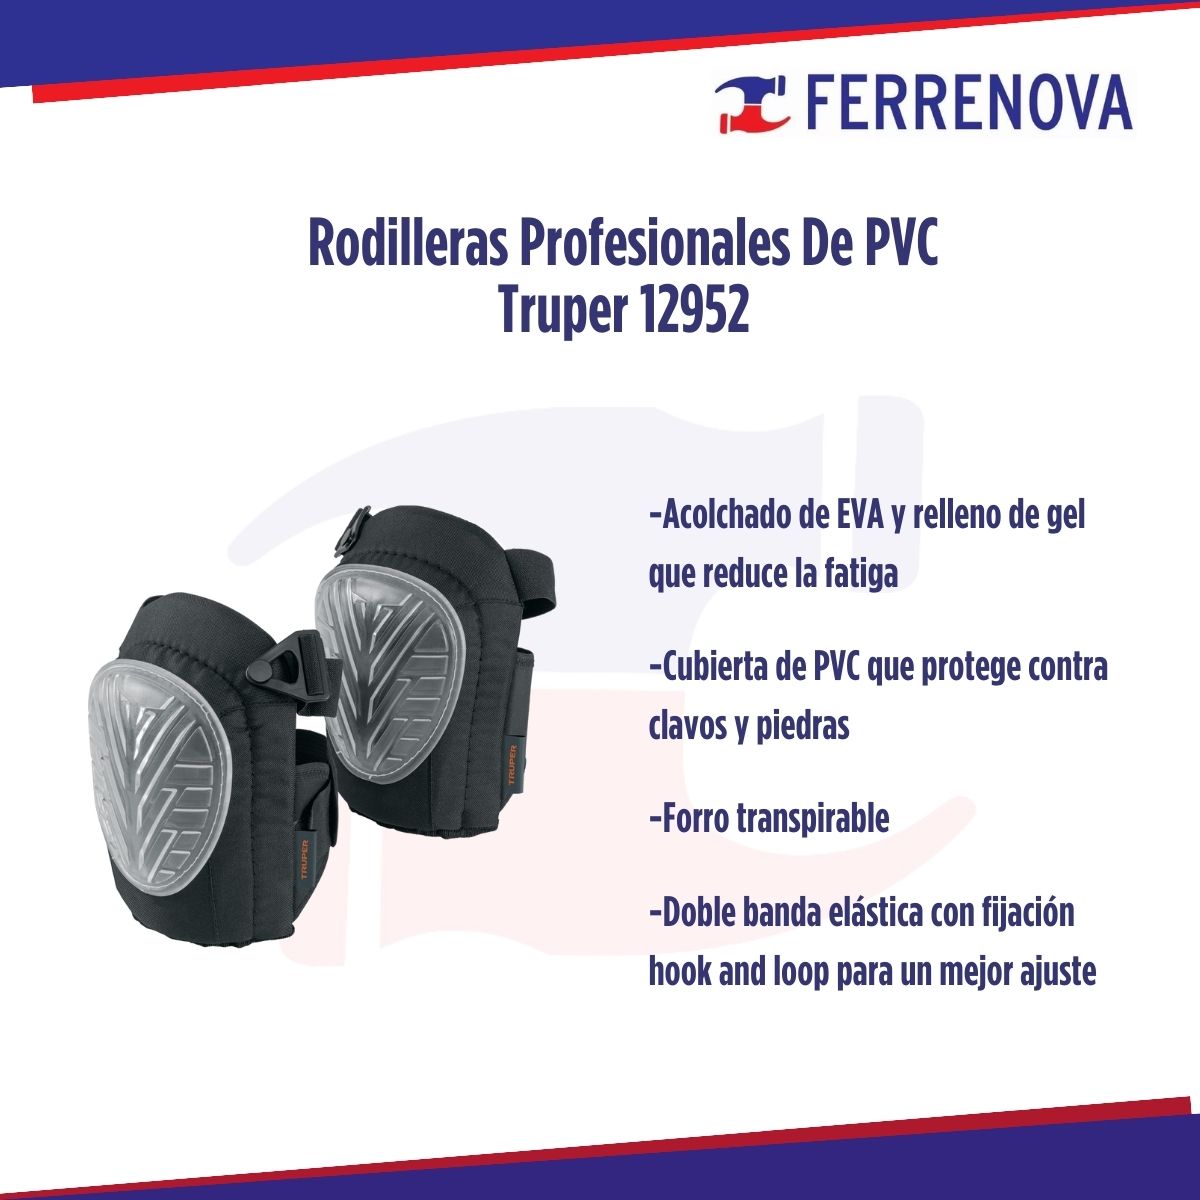 Rodilleras Profesionales De PVC Truper 12952